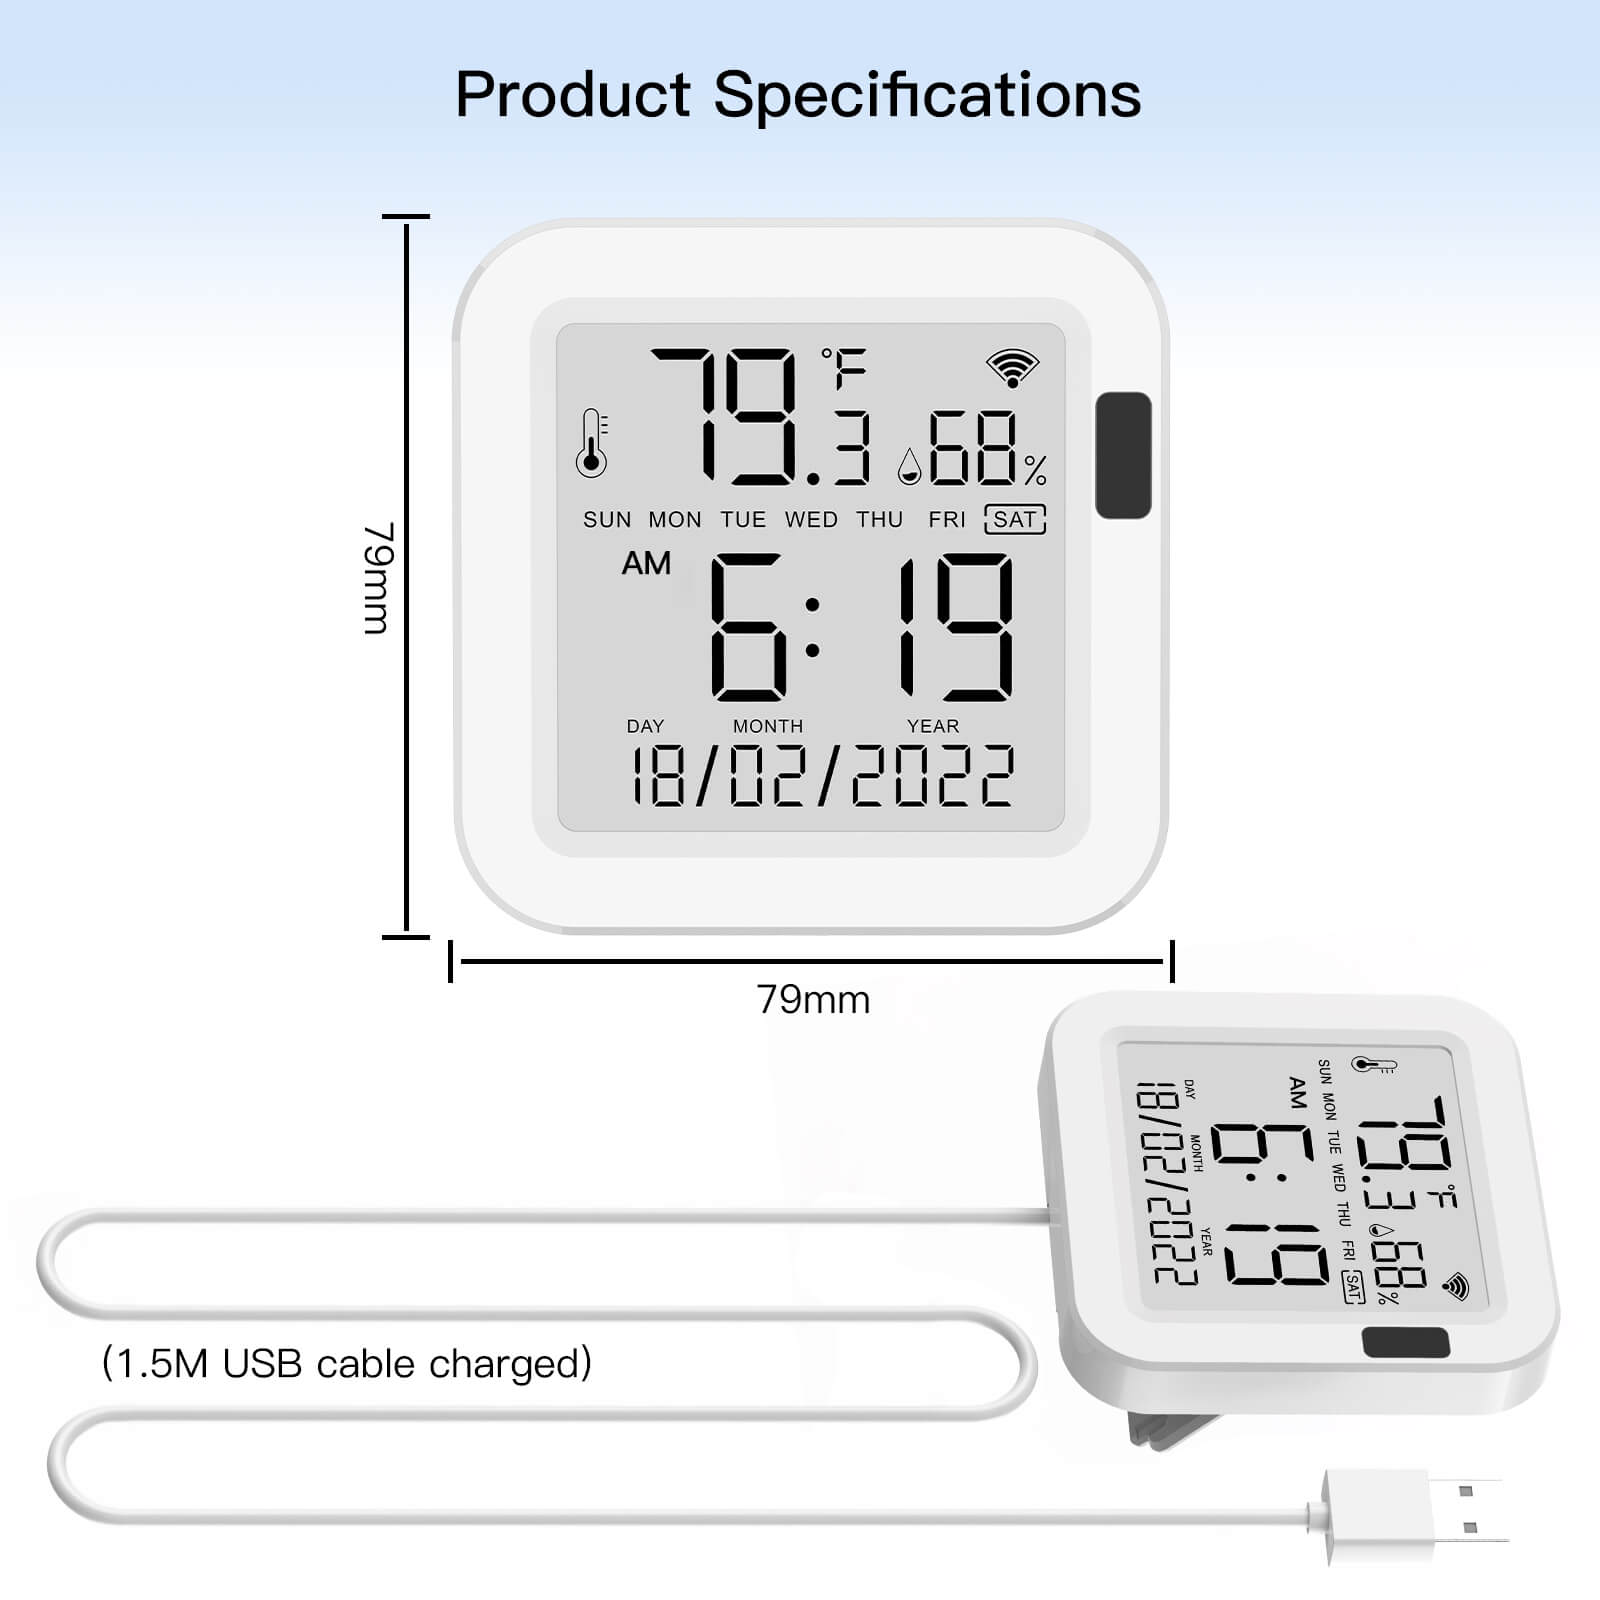 Tuya WiFi temperature and humidity sensor with LCD display - MIR